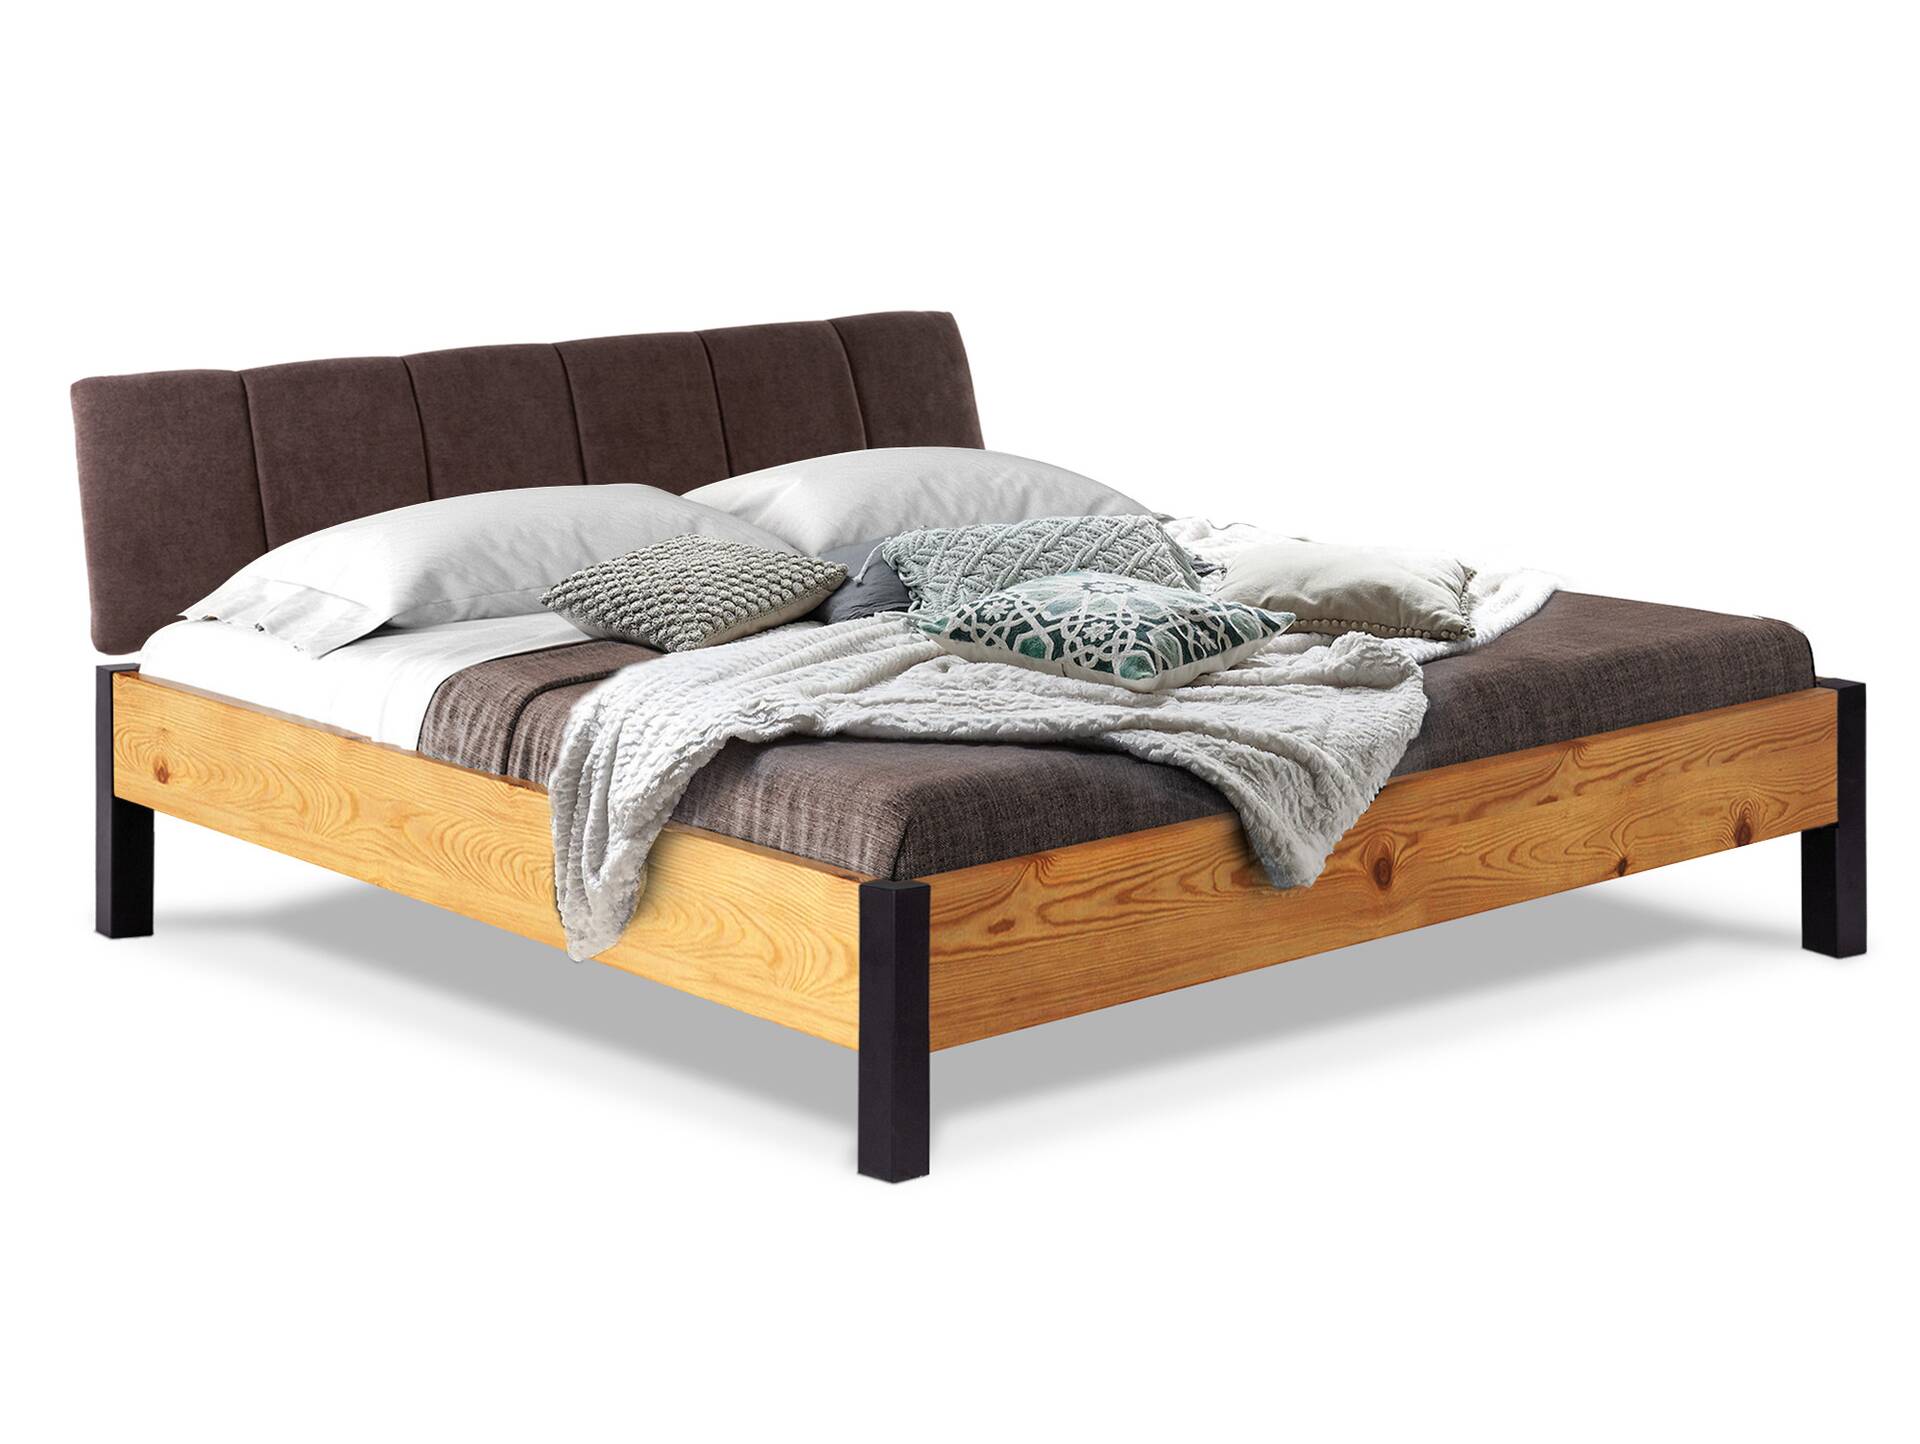 CURBY Bett Metallfuß, mit Polsterkopfteil, Material Massivholz, rustikale Altholzoptik, Fichte 200 x 220 cm | natur | Stoff Braun mit Steppung